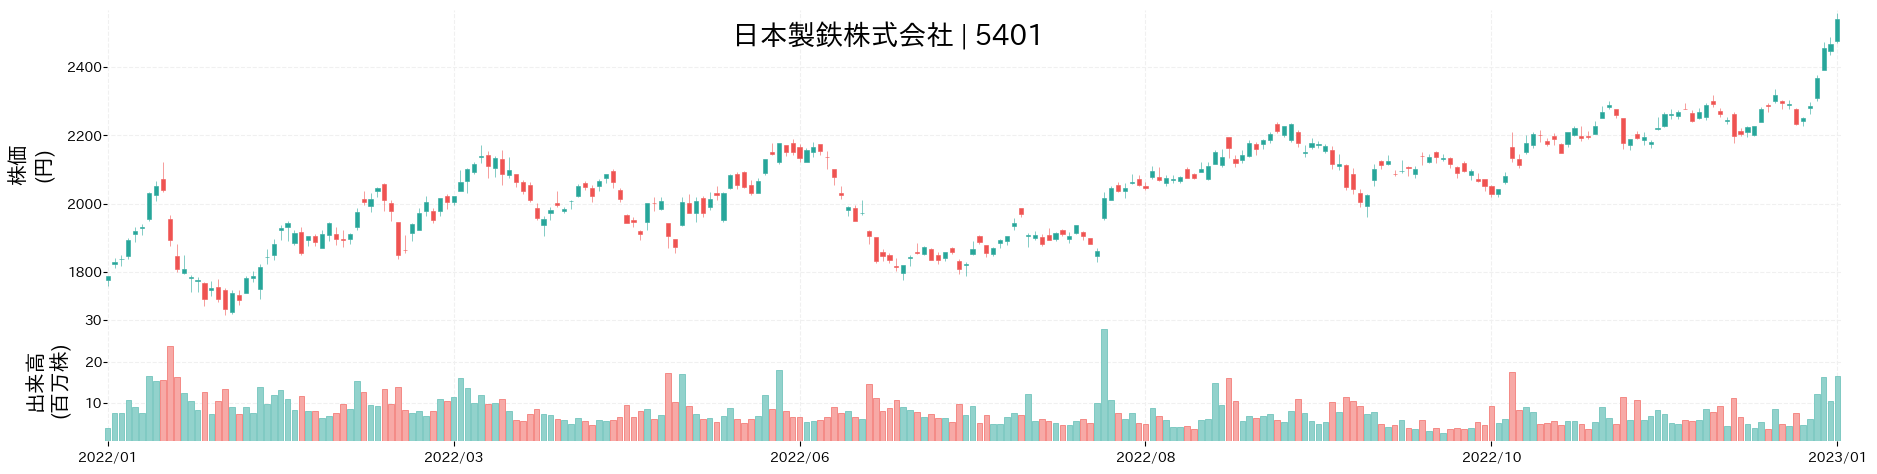 日本製鉄の株価推移(2022)